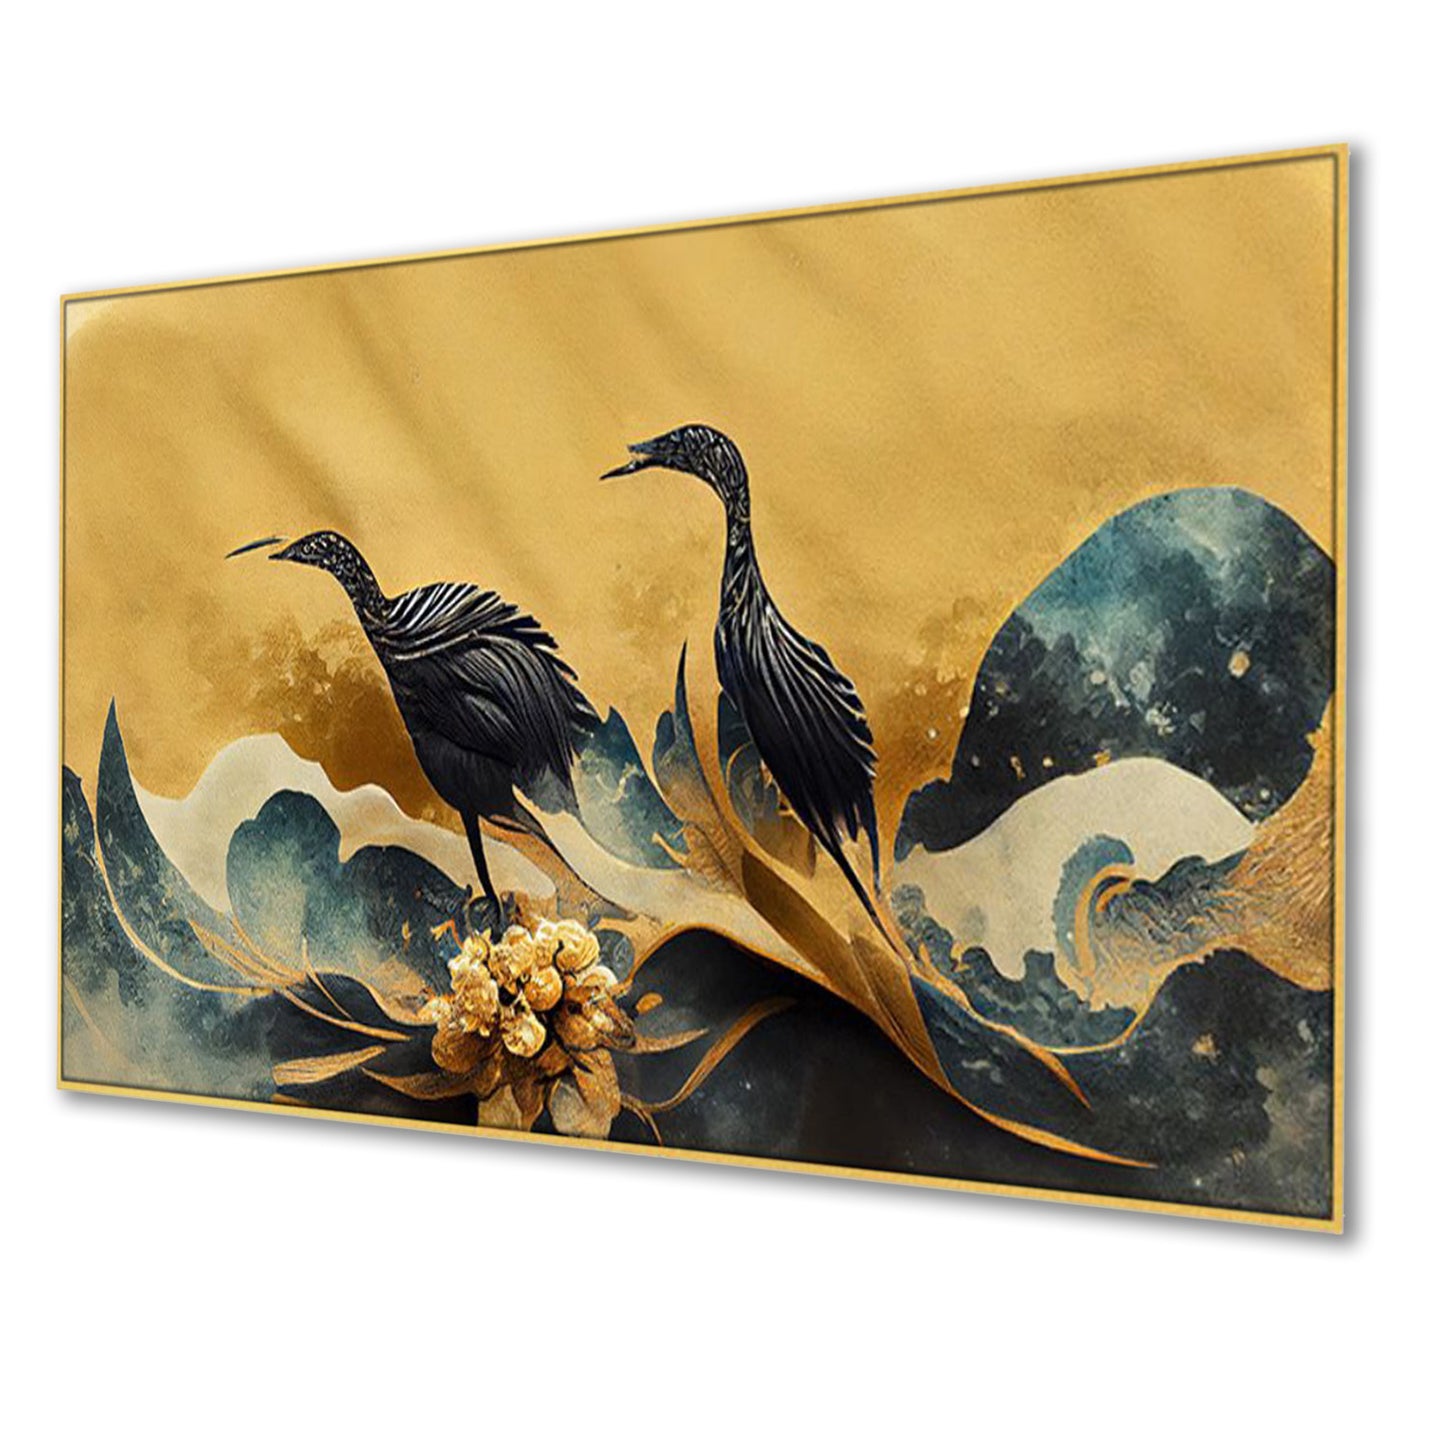 Elegant Birds on Shimmering Gold Wall Painting